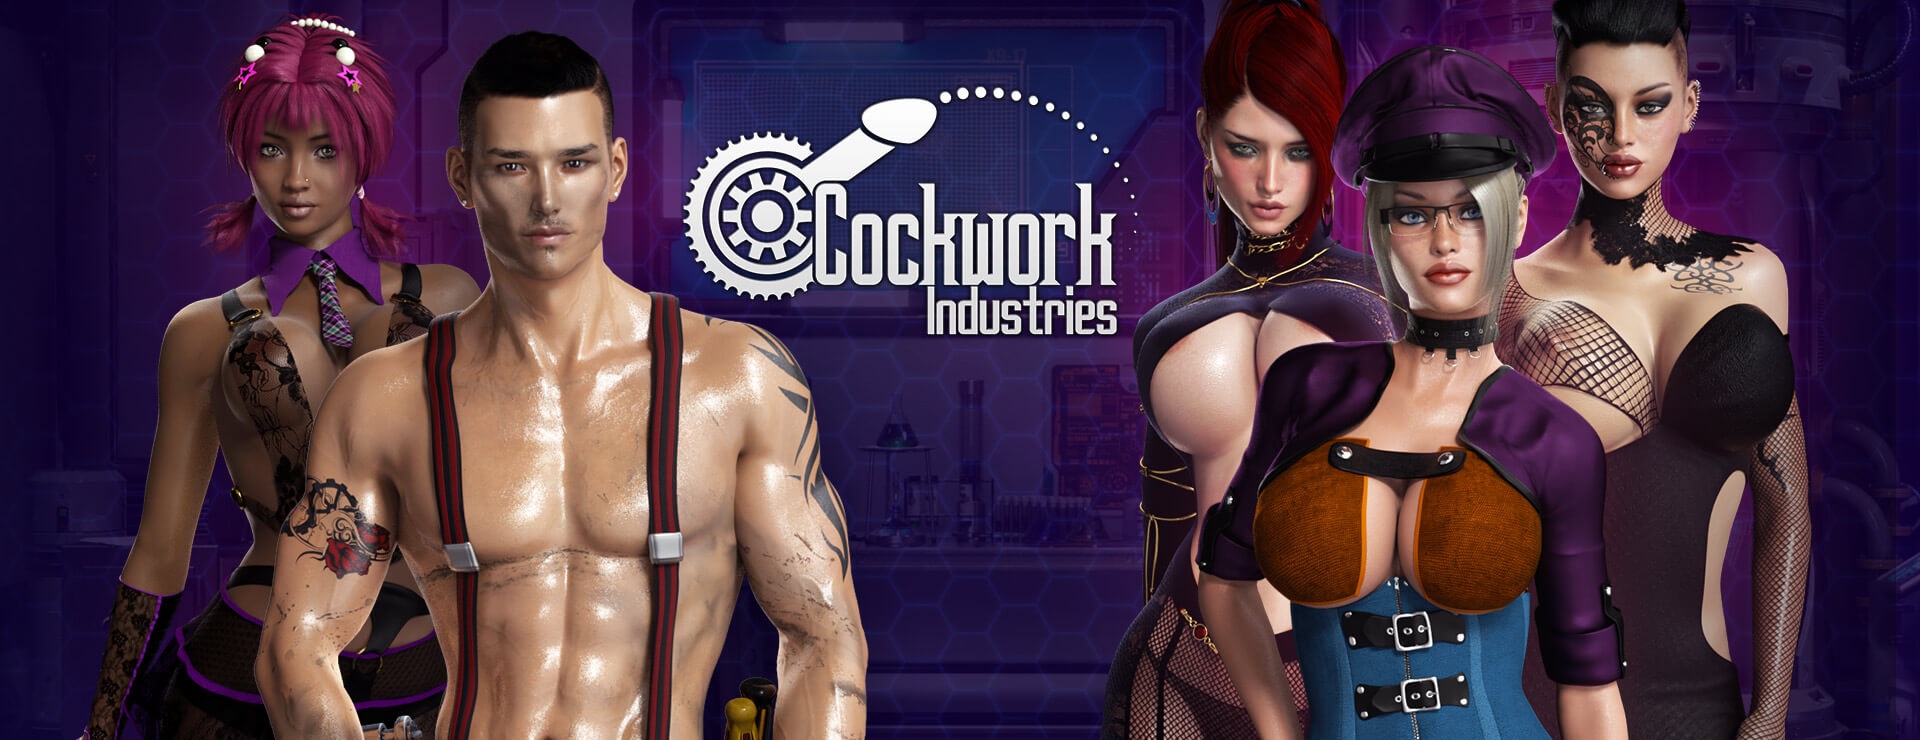 Cockwork Industries - アクションアドベンチャー ゲーム